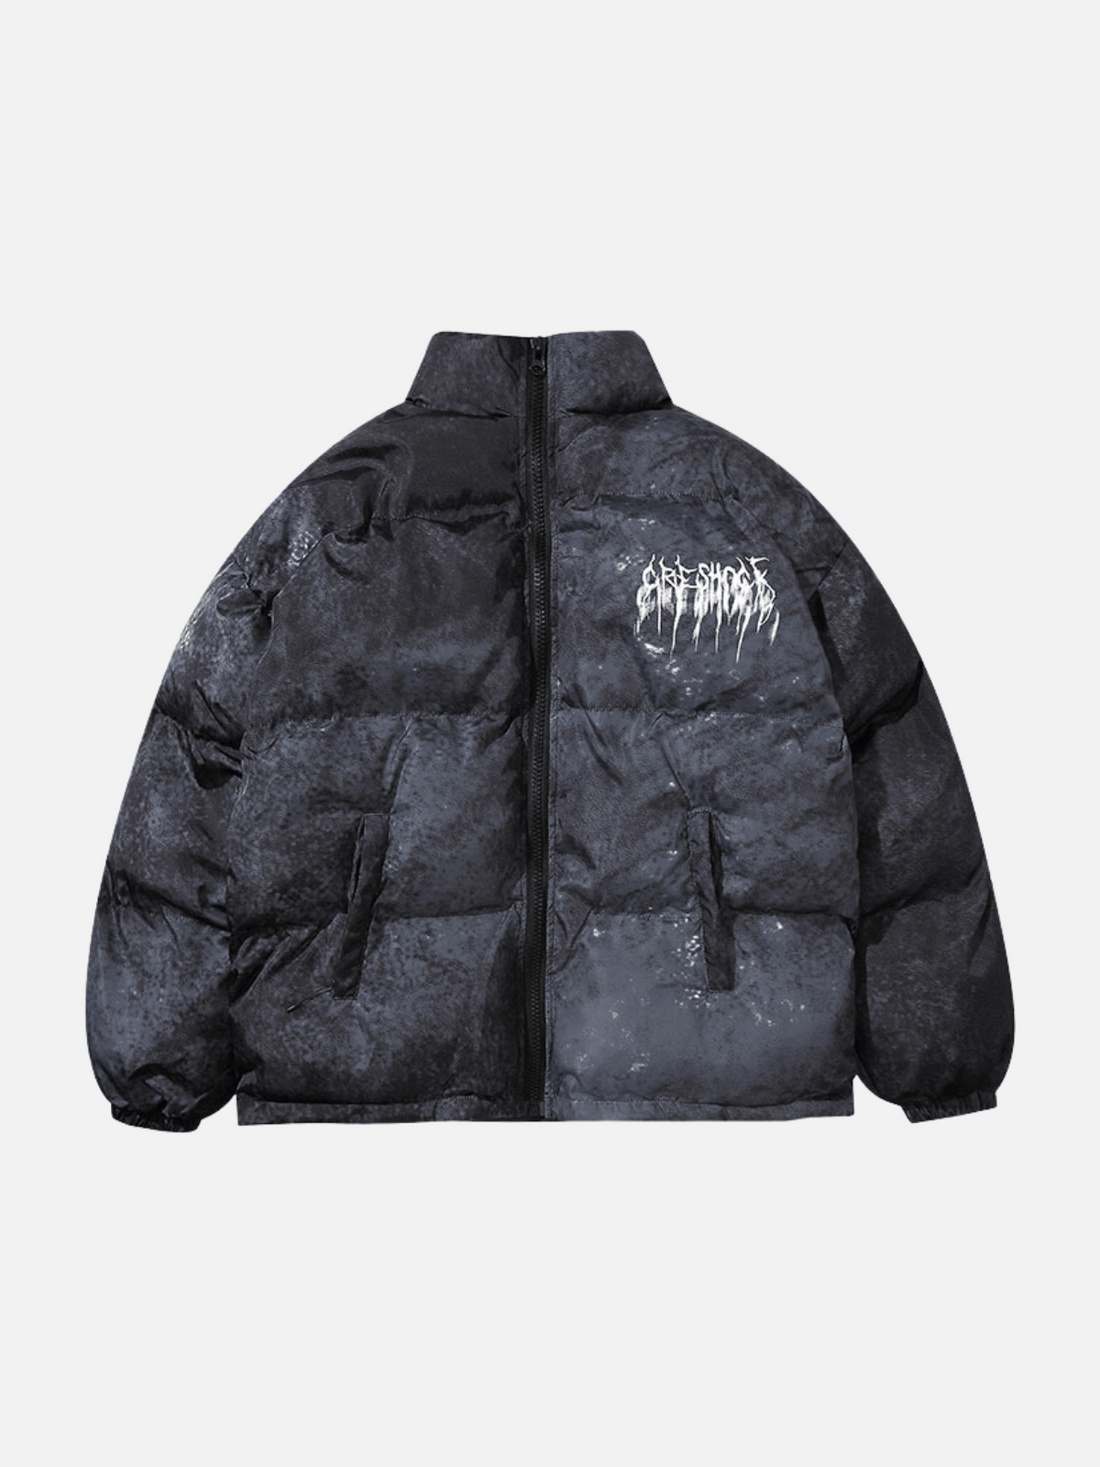 CRESHOCK - Puffer Jacket | Teenwear.eu